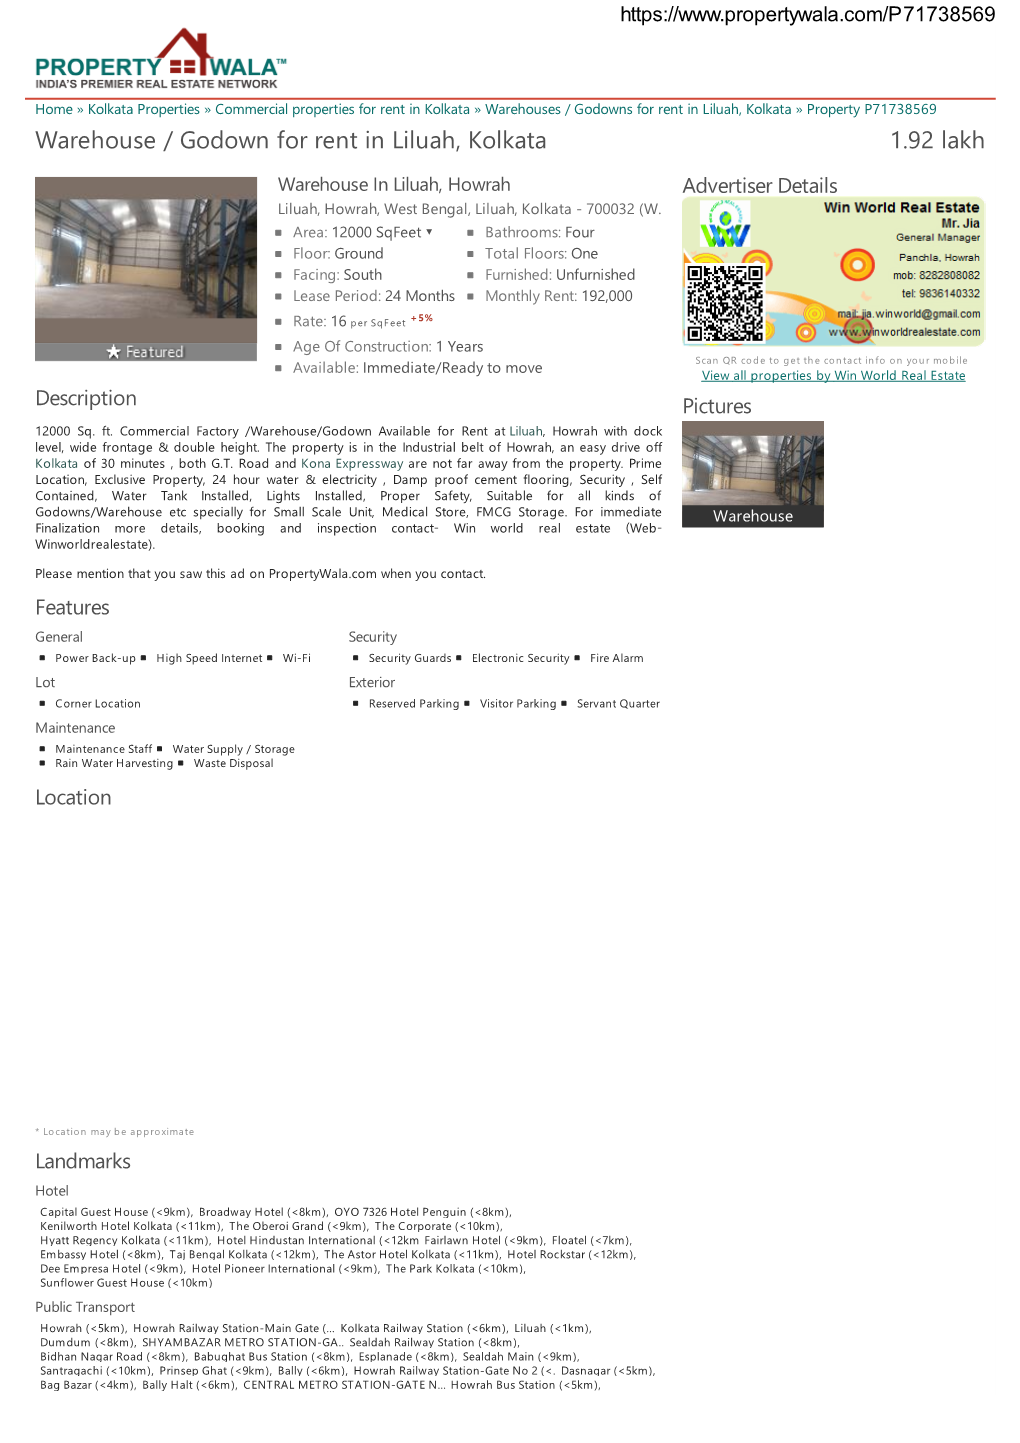 Warehouse / Godown for Rent in Liluah, Kolkata (P71738569